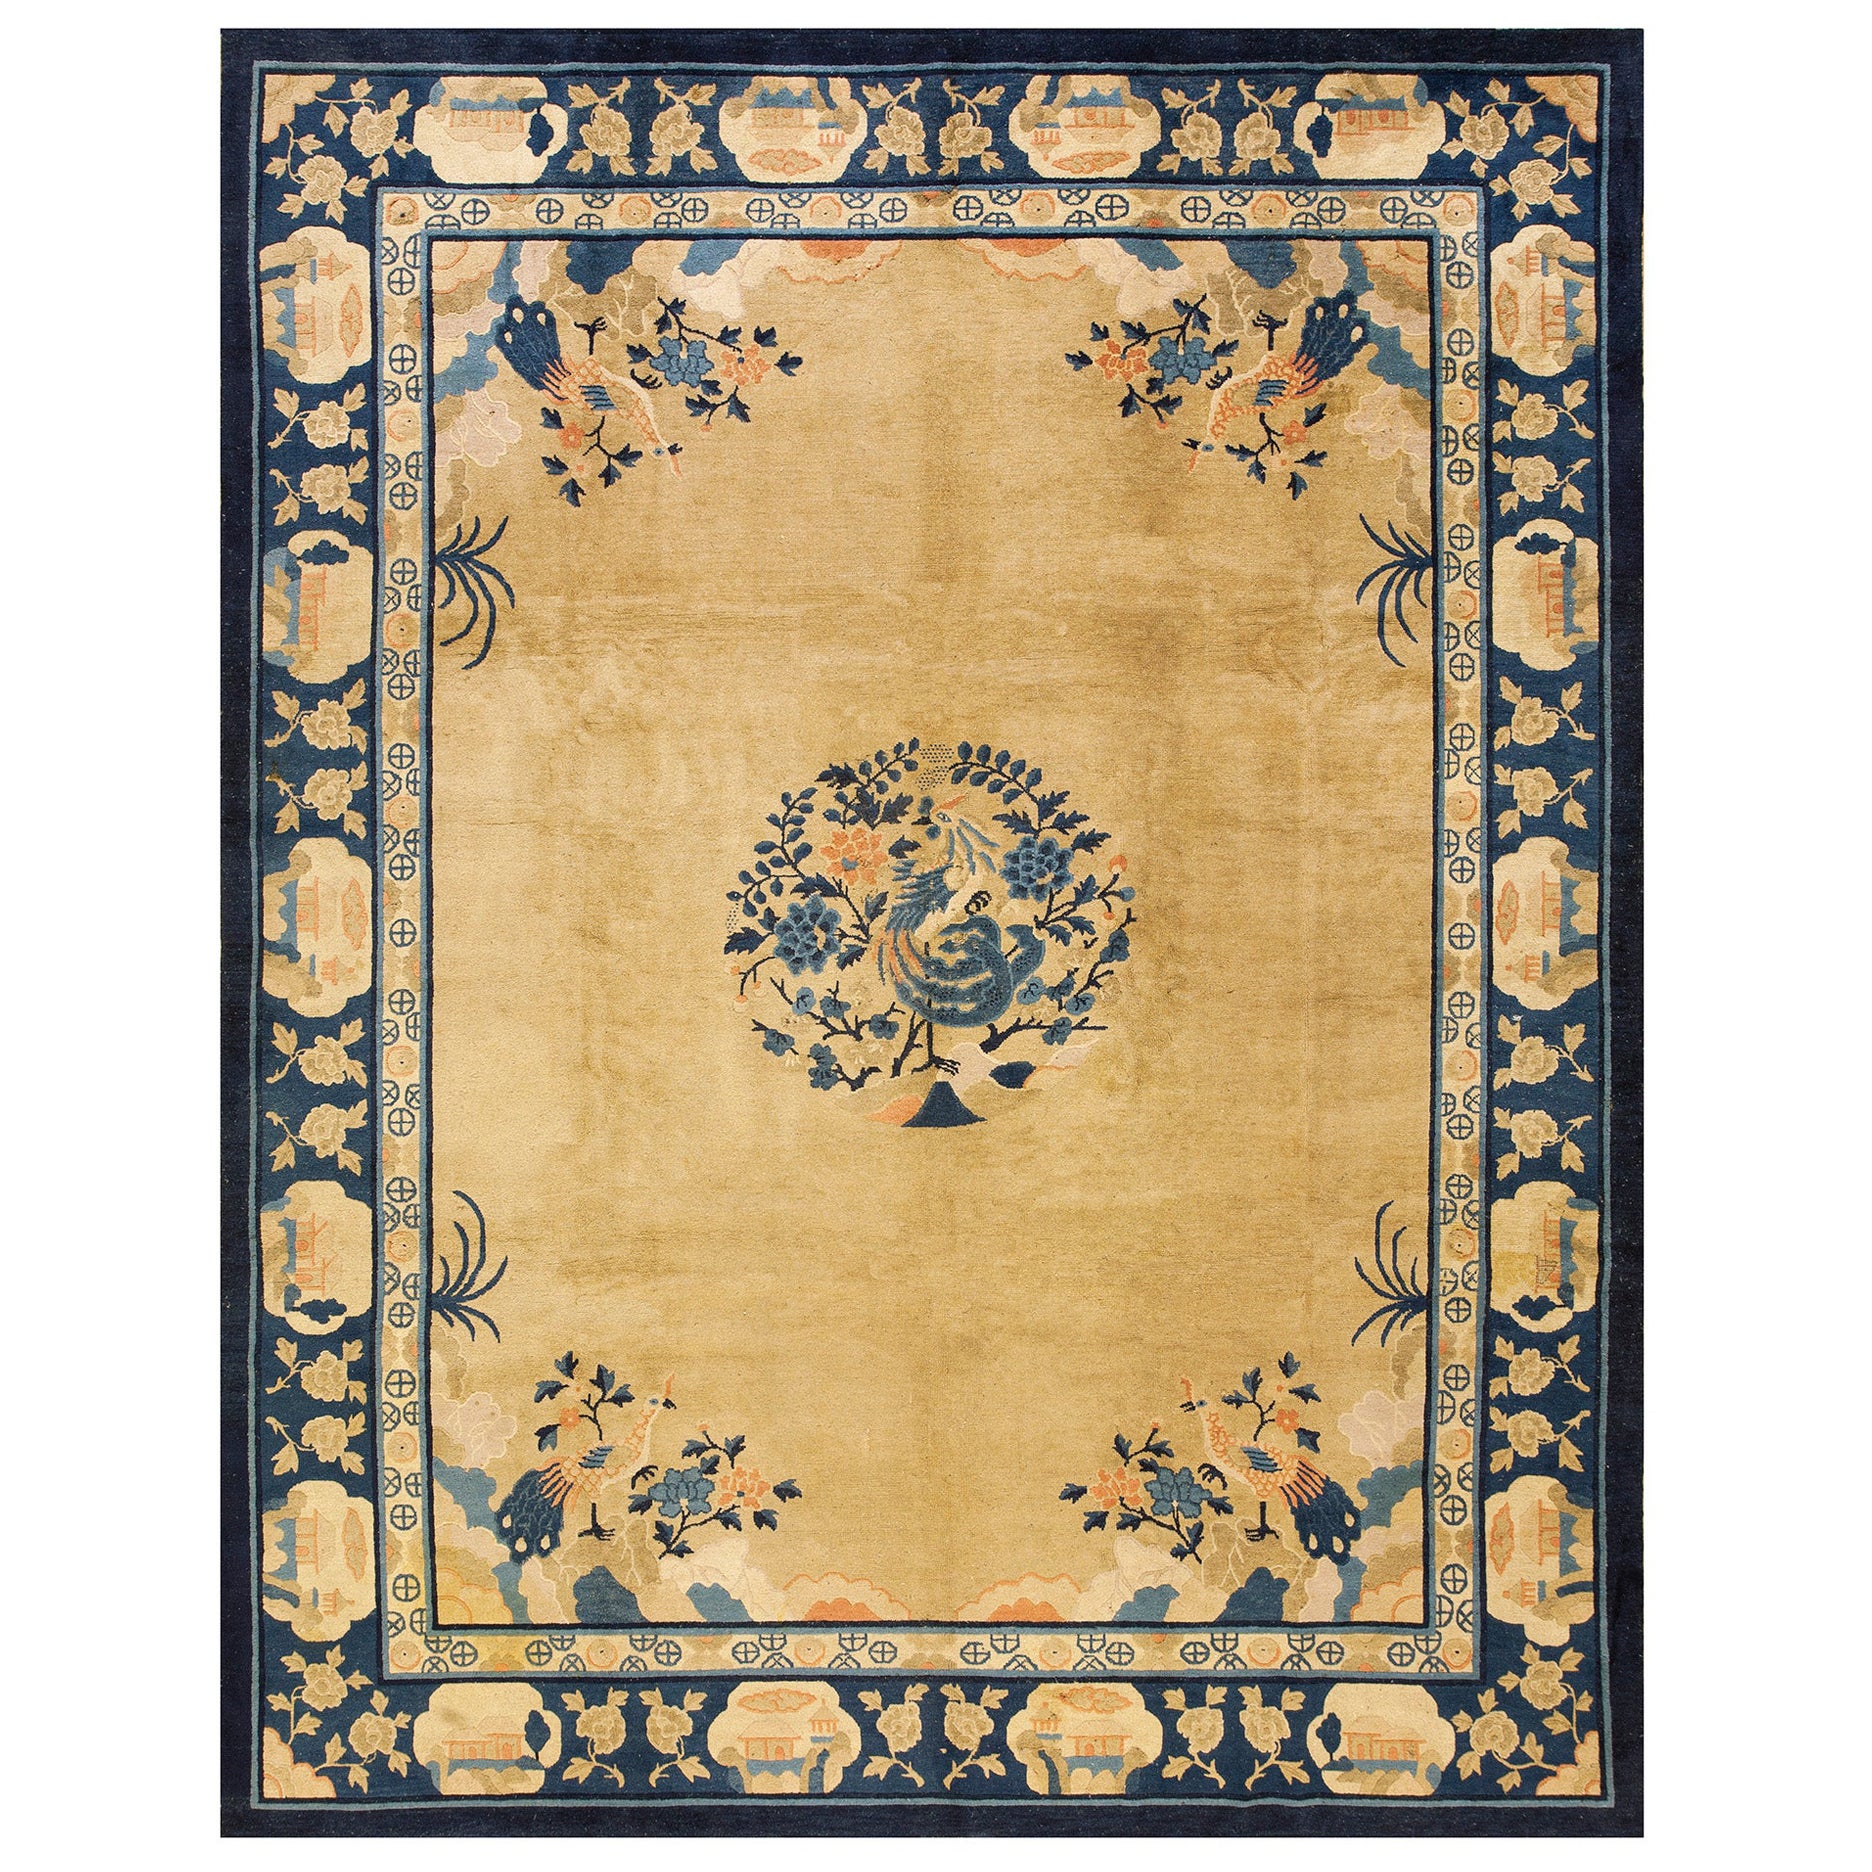 Early 20th Century Chinese Peking Carpet ( 9' x 11'6'' - 275 x 350 )